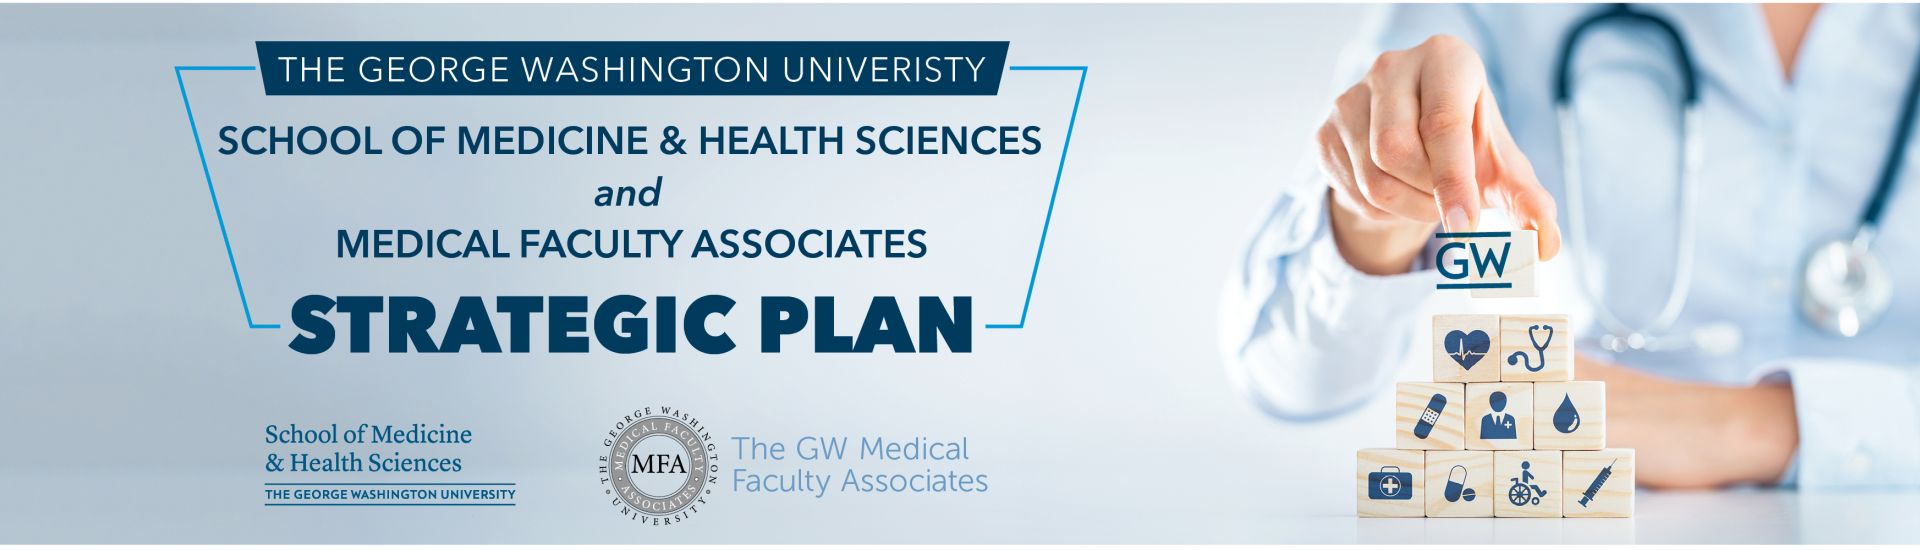 The George Washington University SMHS and MFA Strategic Plan